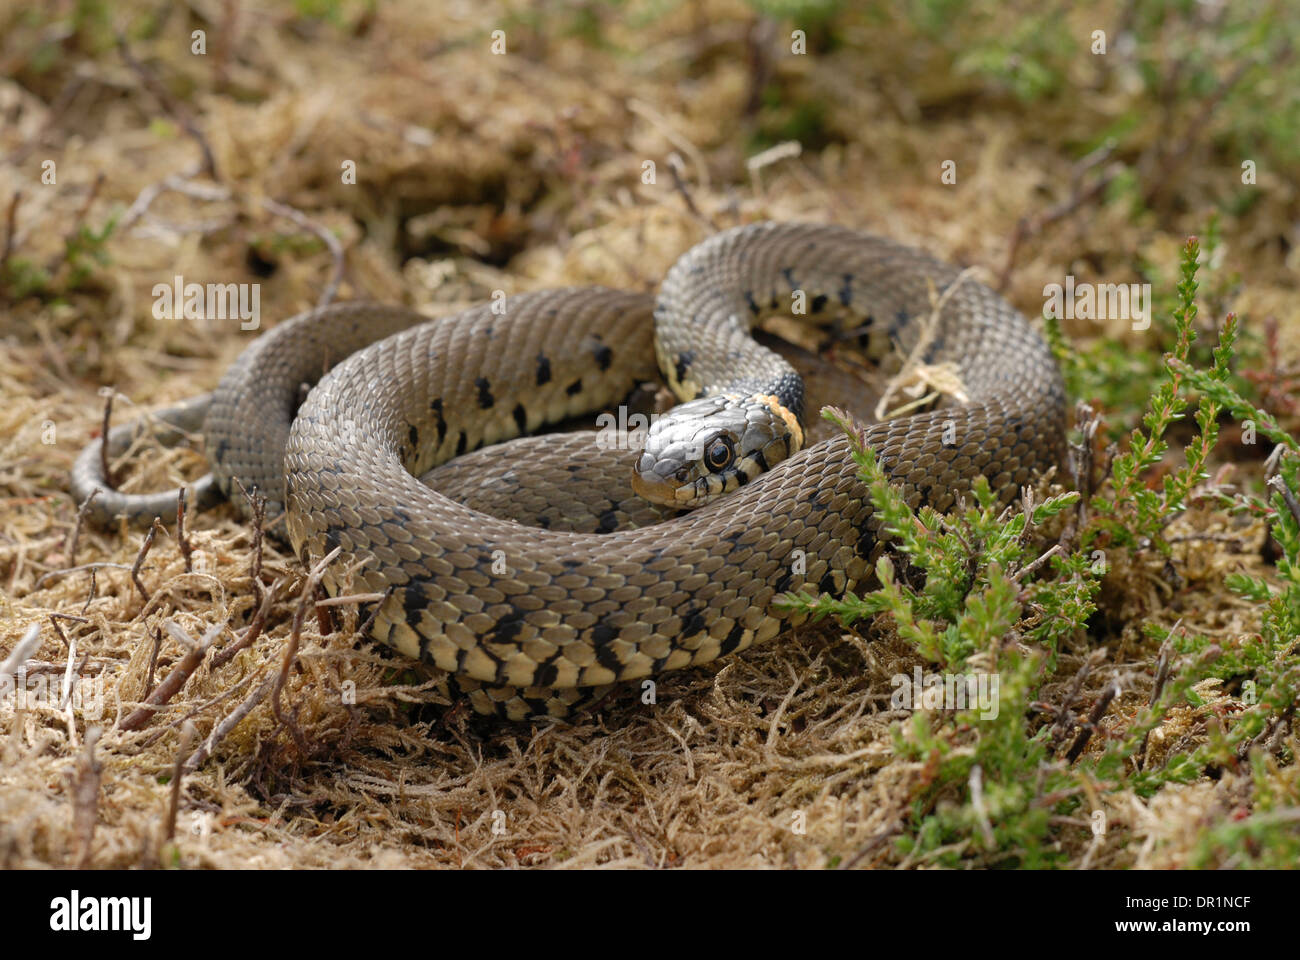 Grass snake (Natrix natrix) coiled up. Stock Photo